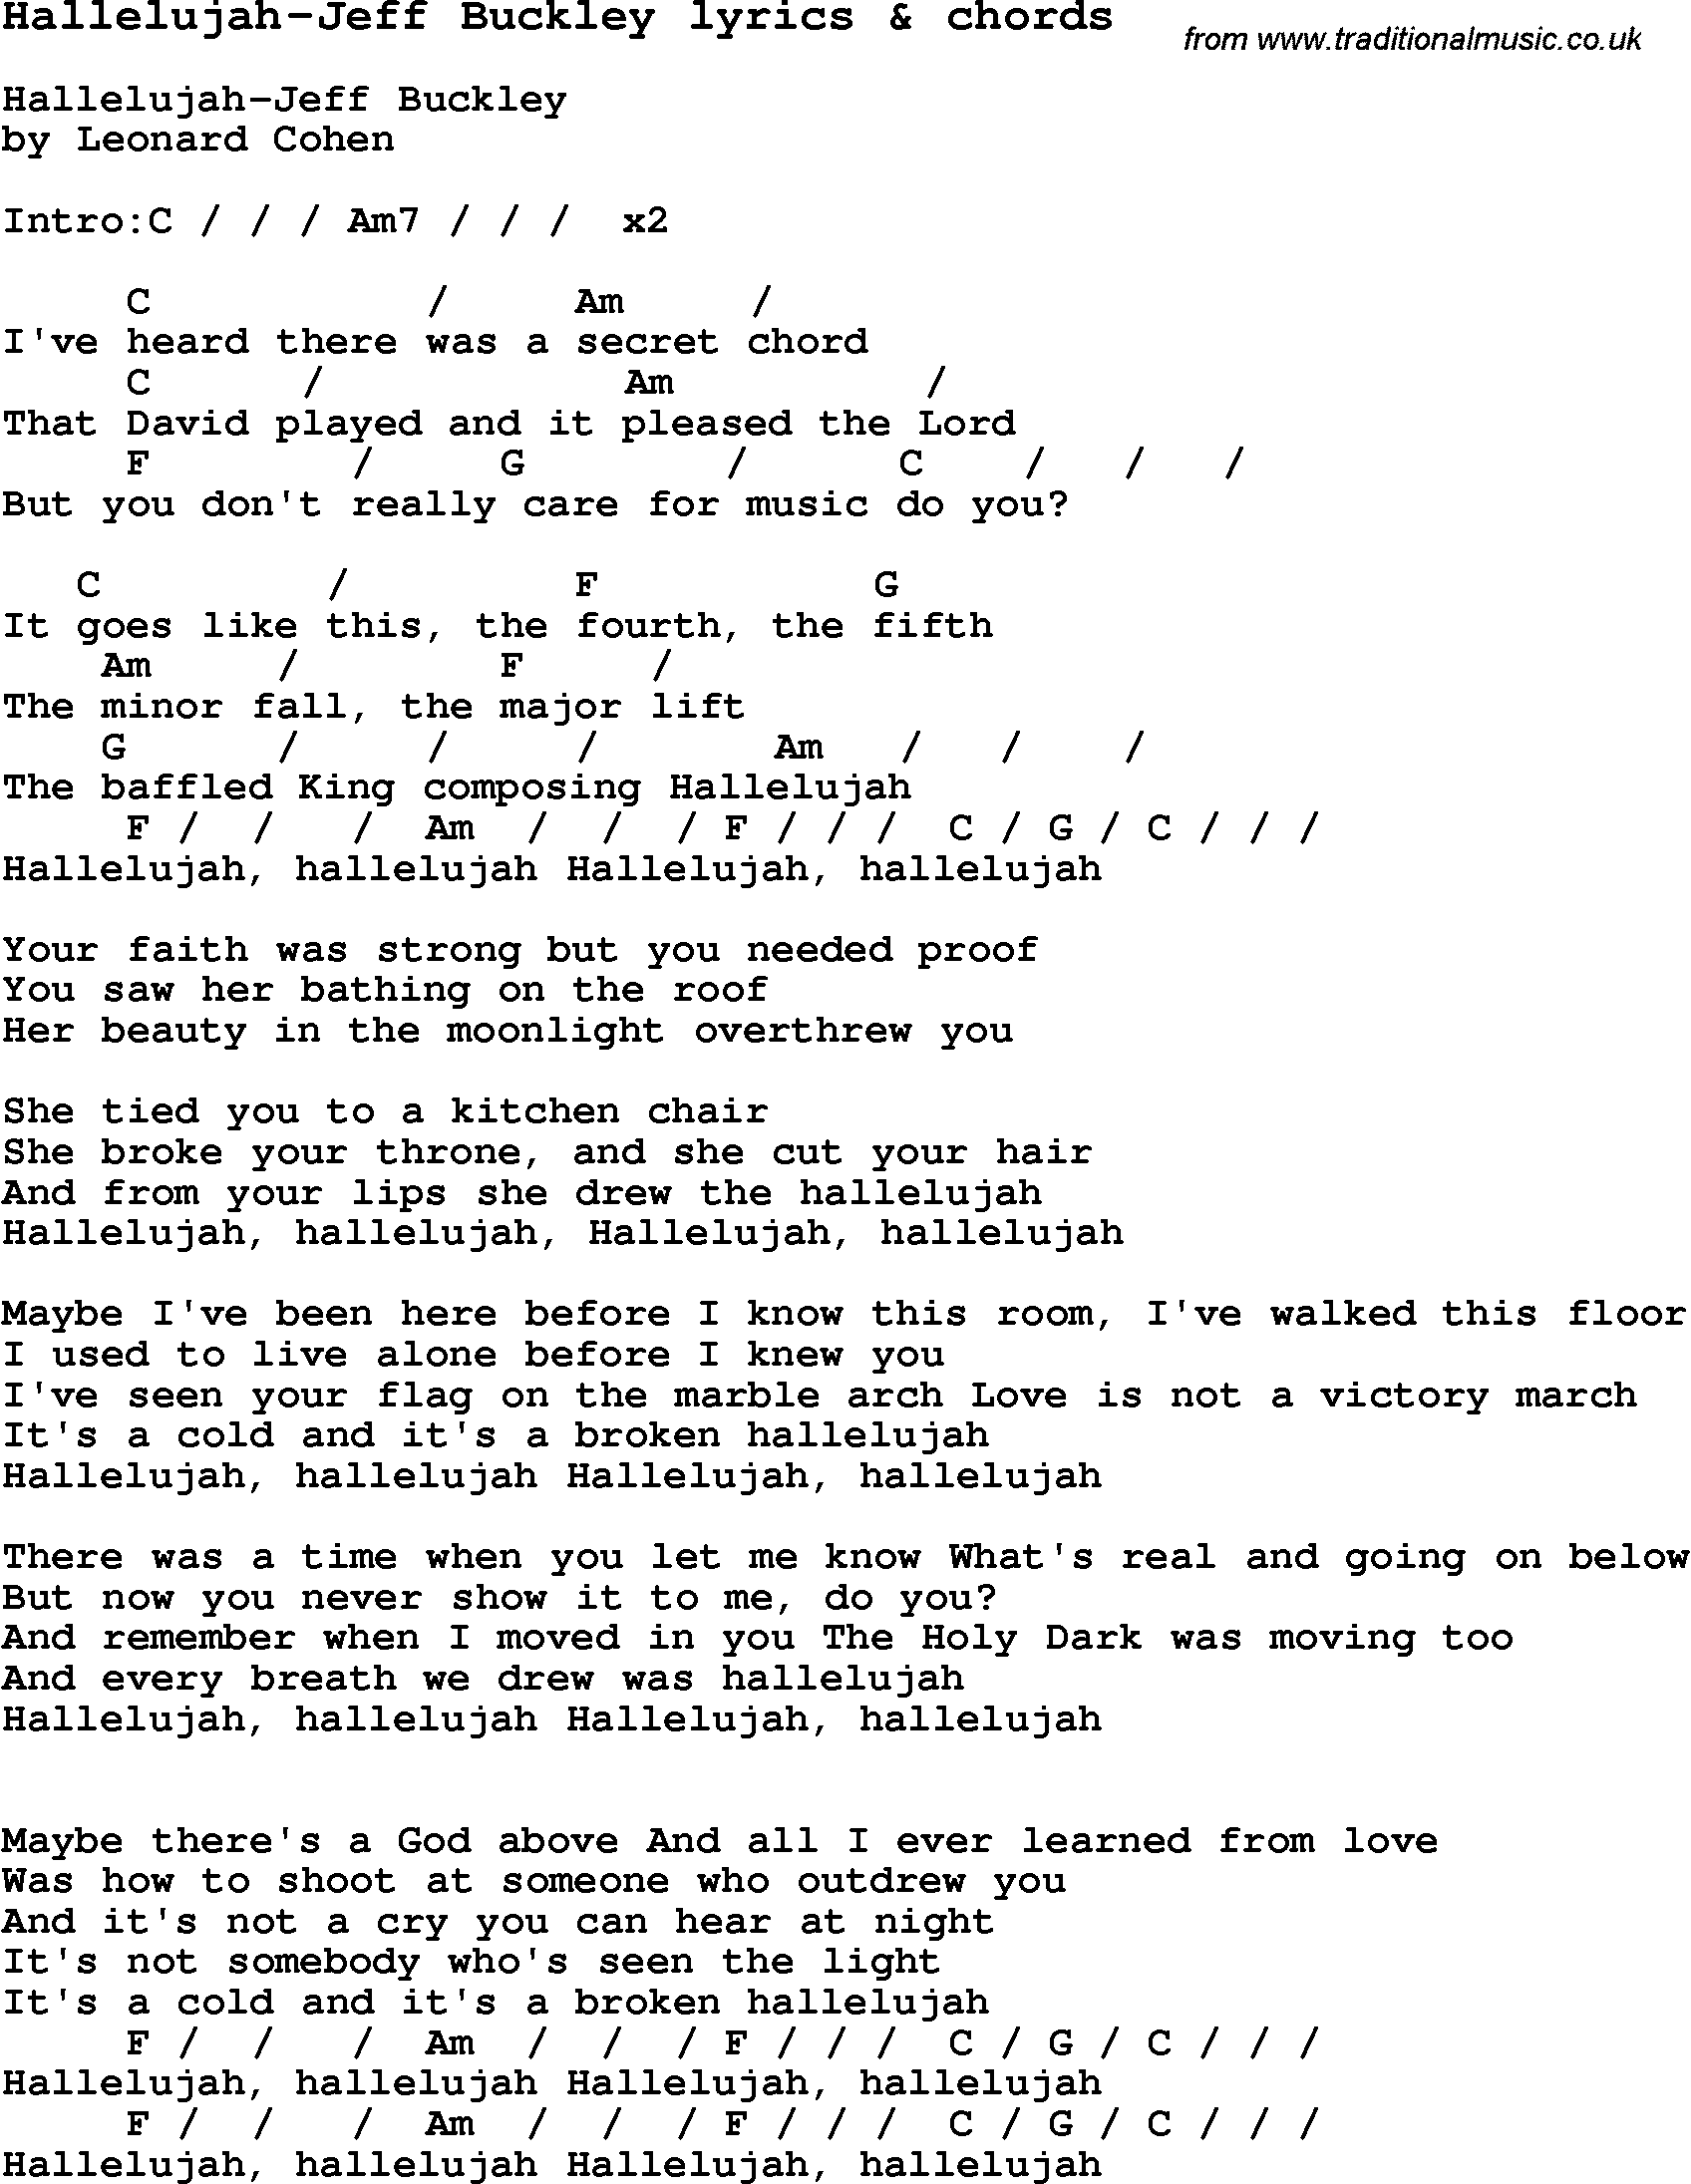 Love Song Lyrics for: Hallelujah-Jeff Buckley with chords for Ukulele, Guitar Banjo etc.